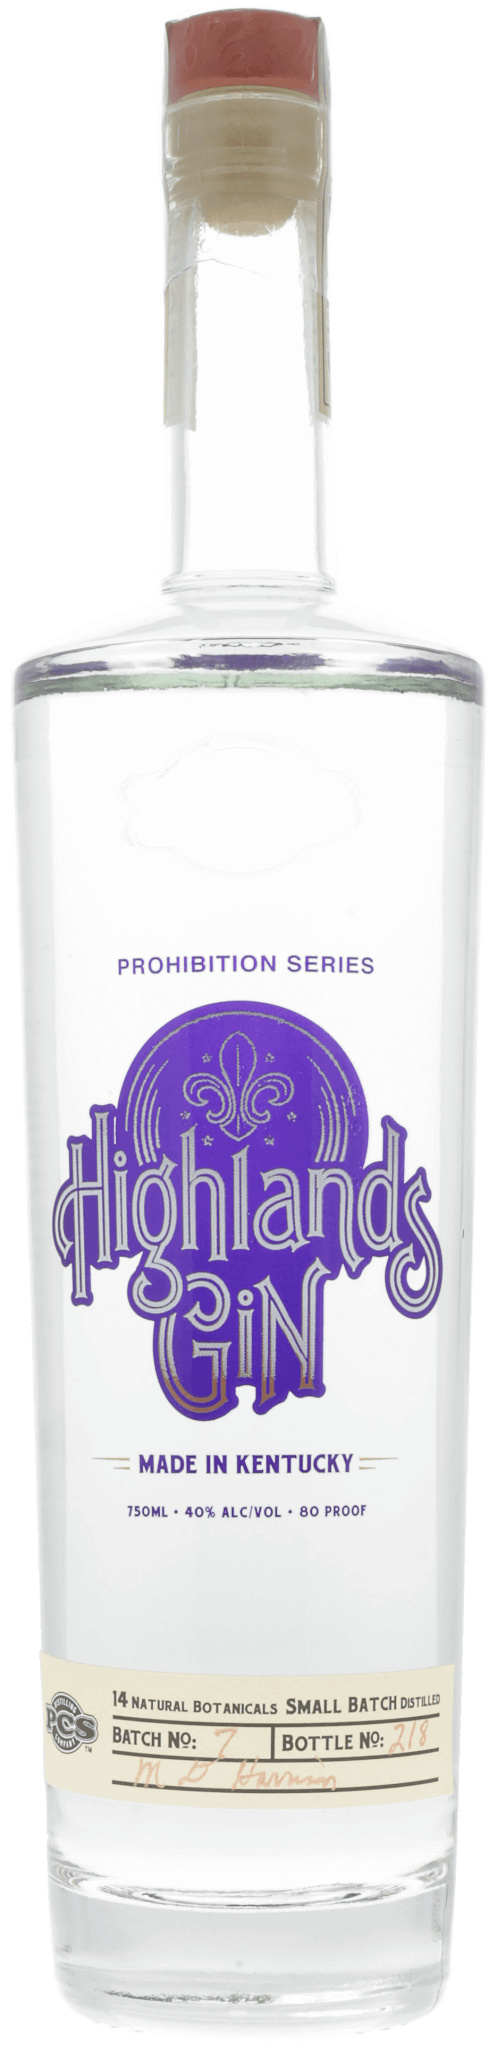 Highlands Gin